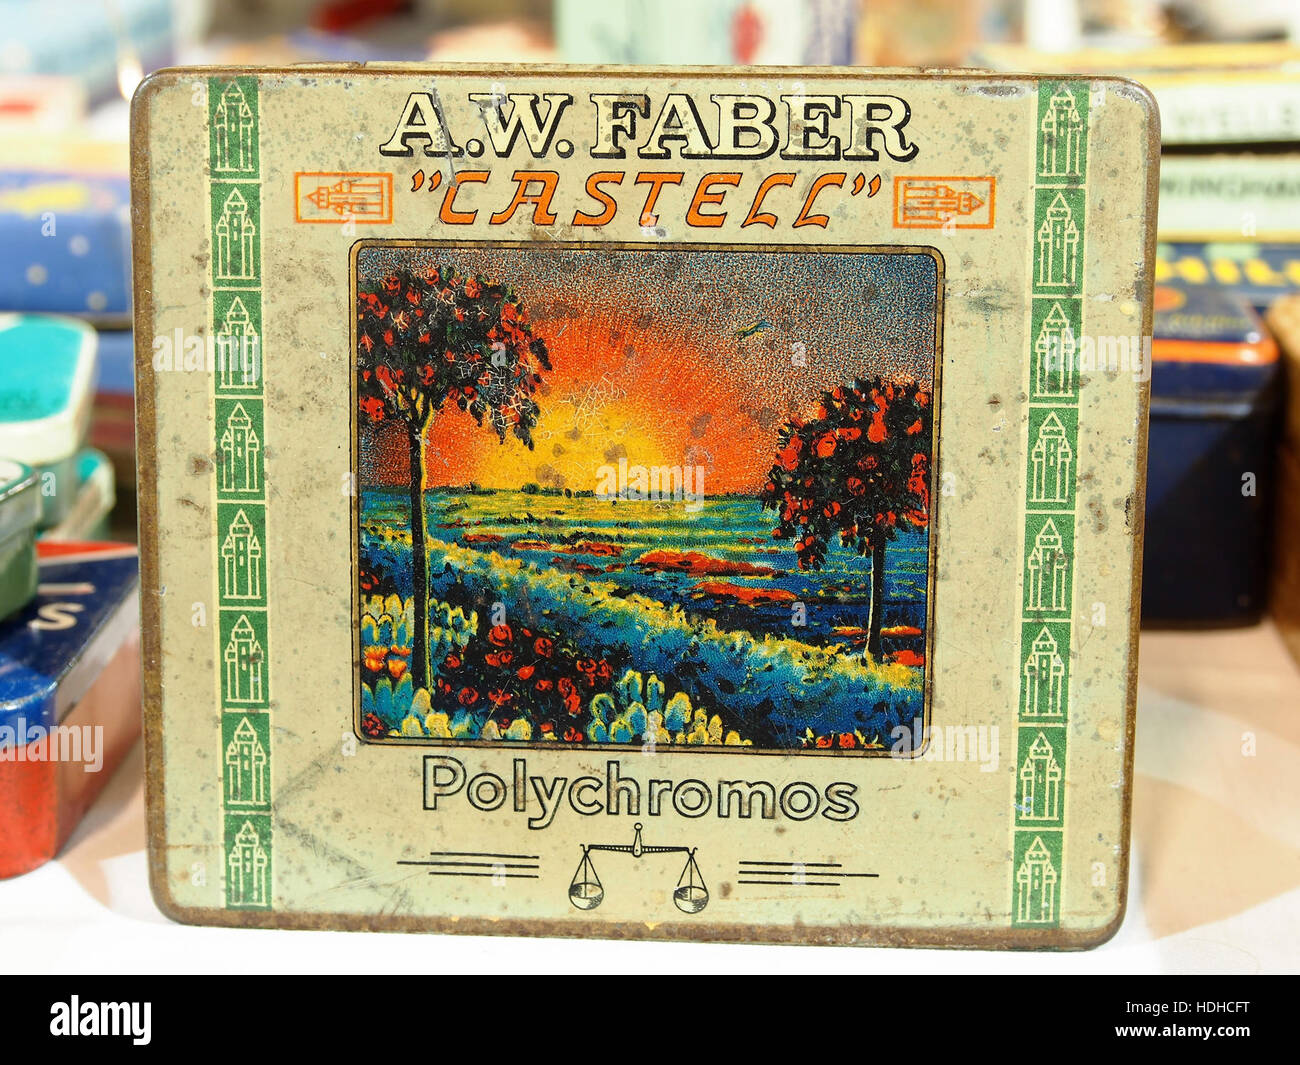 AW Faber Castell Polychromos blikje Stock Photo